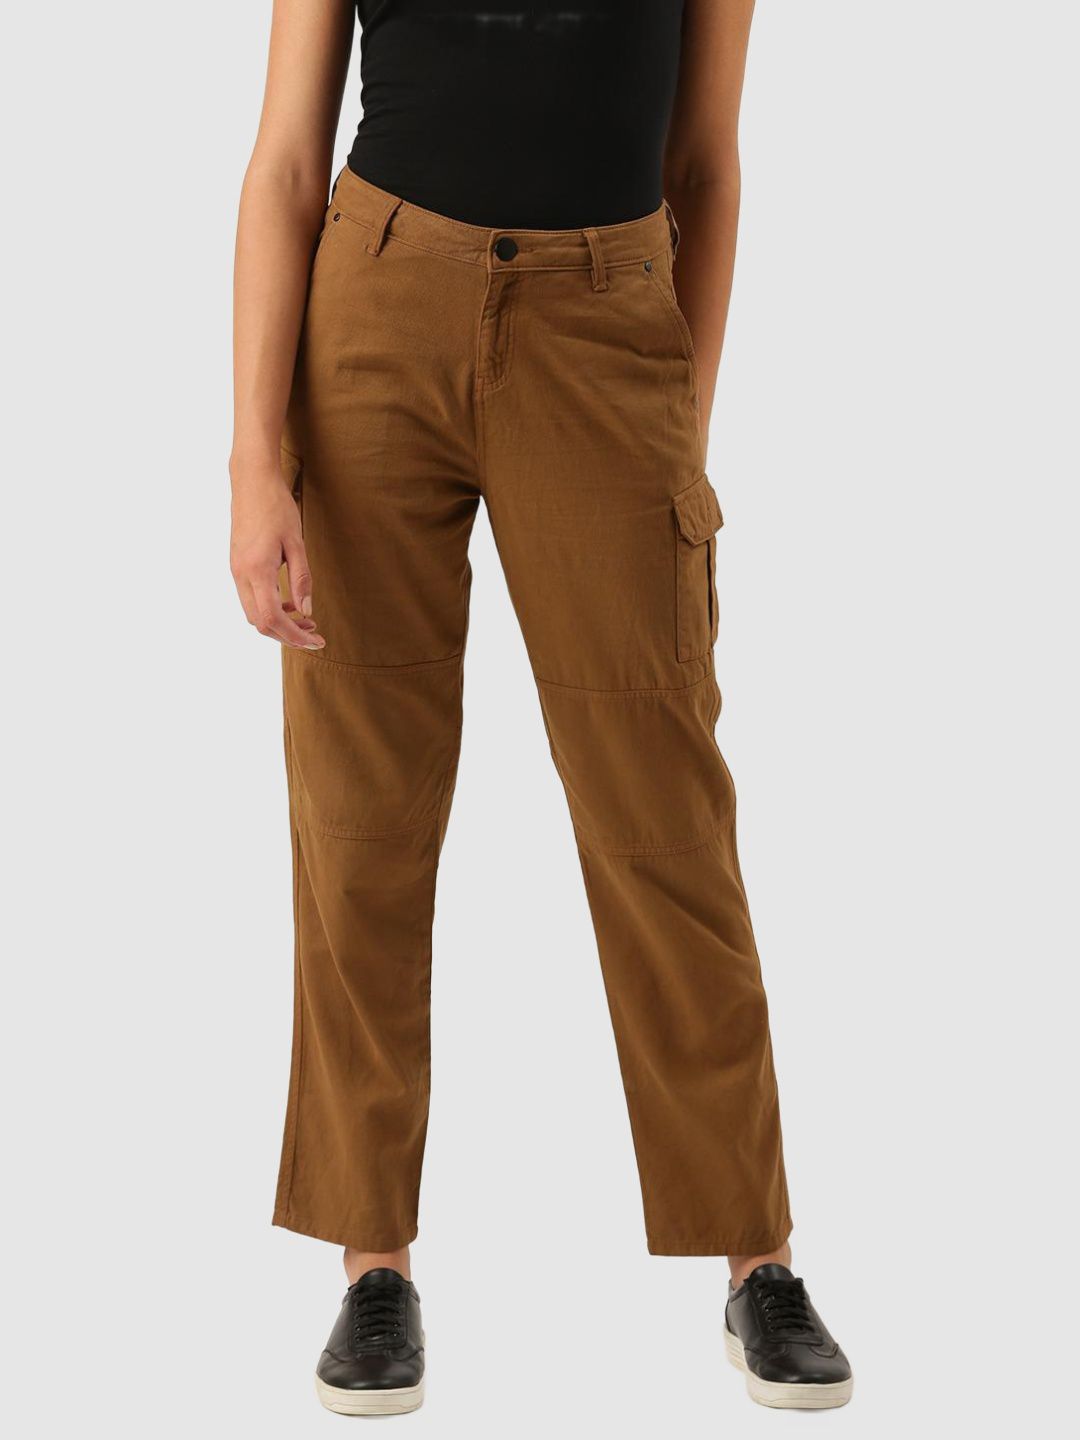     			IVOC - Brown Cotton Slim Women's Cargo Pants ( Pack of 1 )